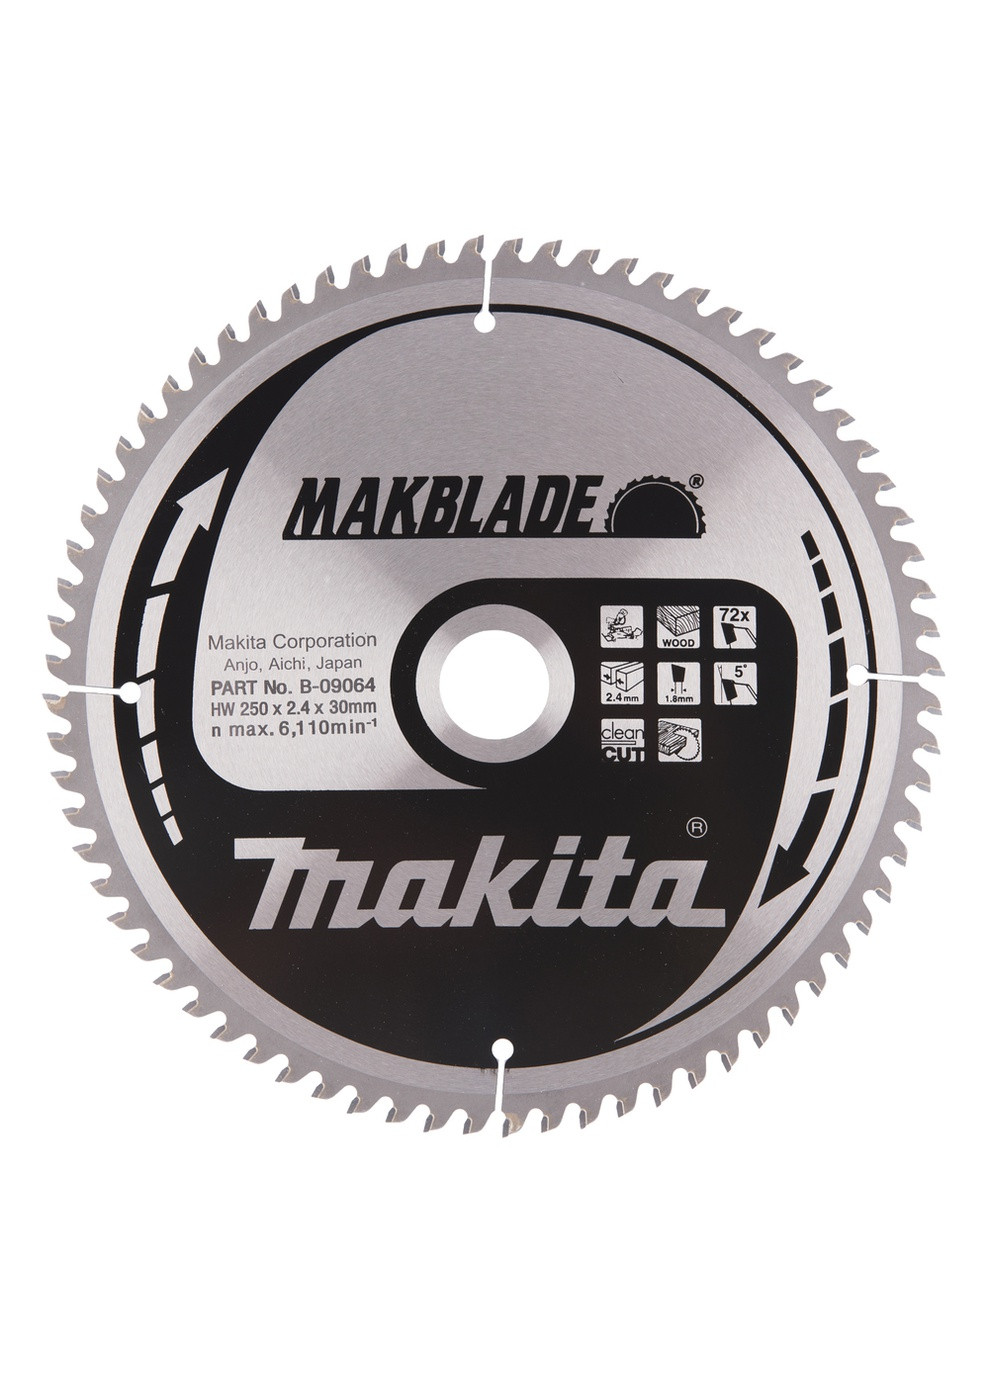 Пильный диск MAKBlade B09064 (250x30 мм, 72 зубьев) по дереву (6488) Makita (267819645)